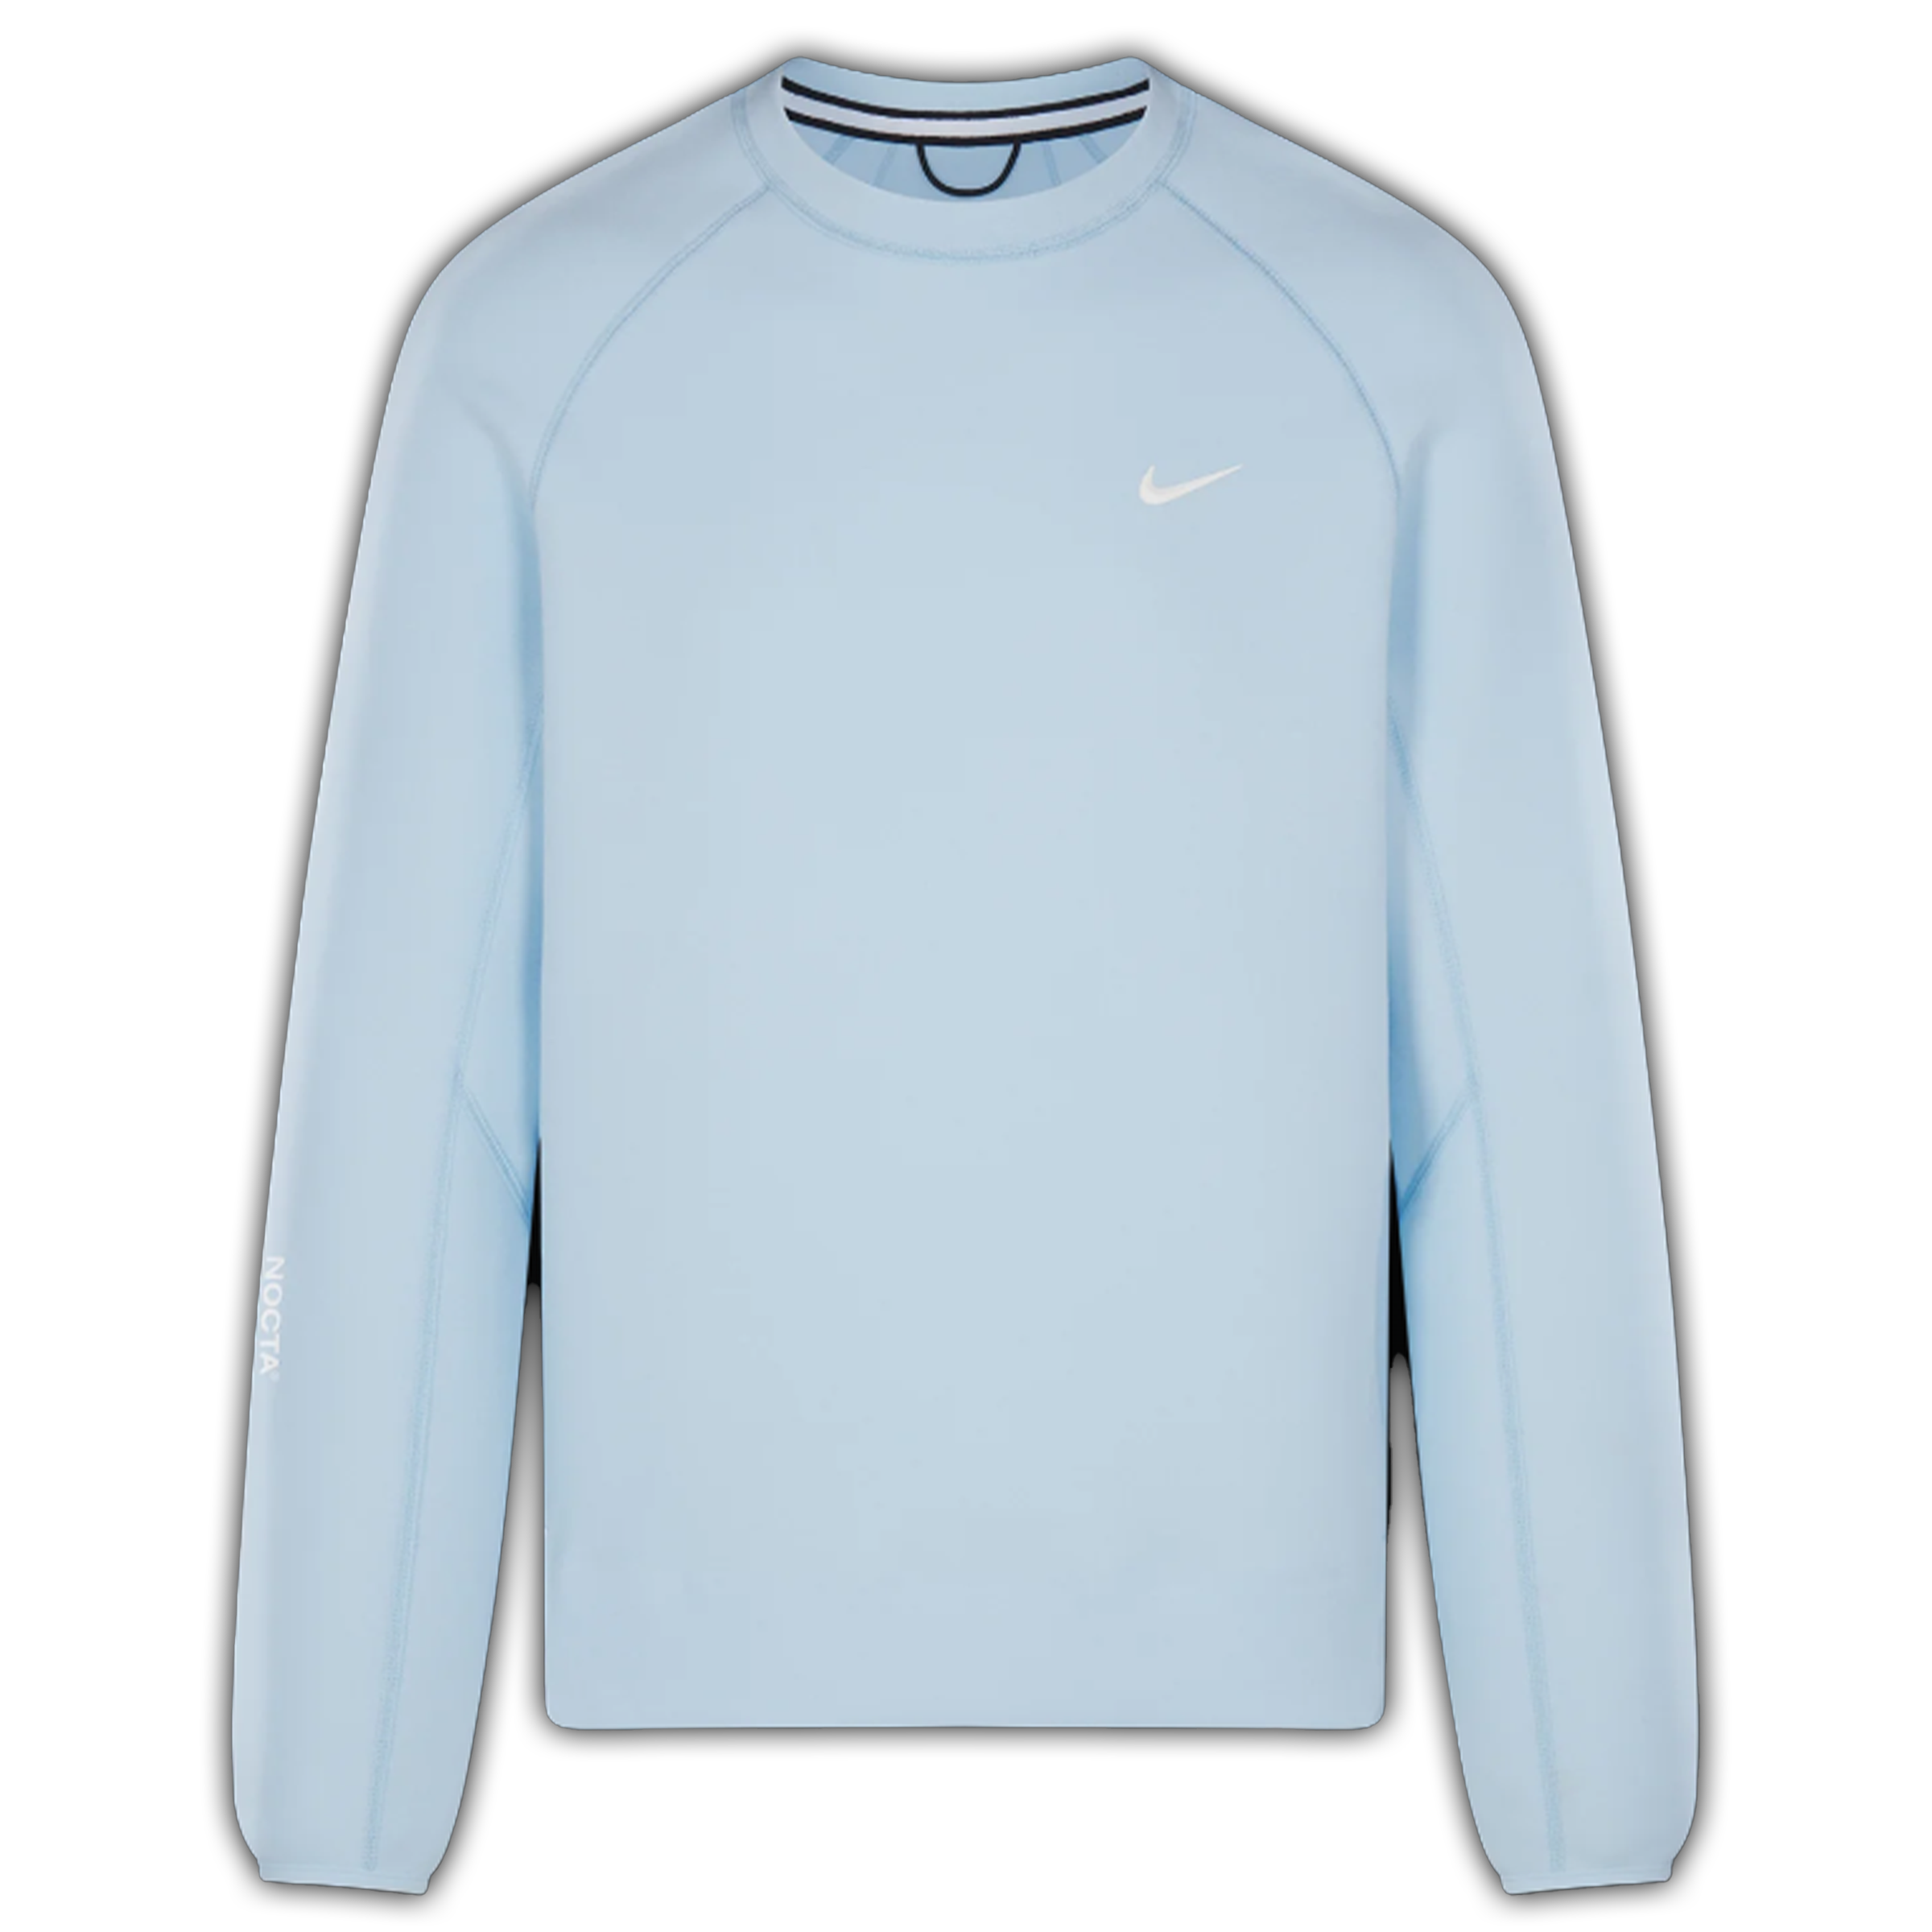 Nike x NOCTA Tech Fleece "Cobalt Blue Tint" Sweatshirt